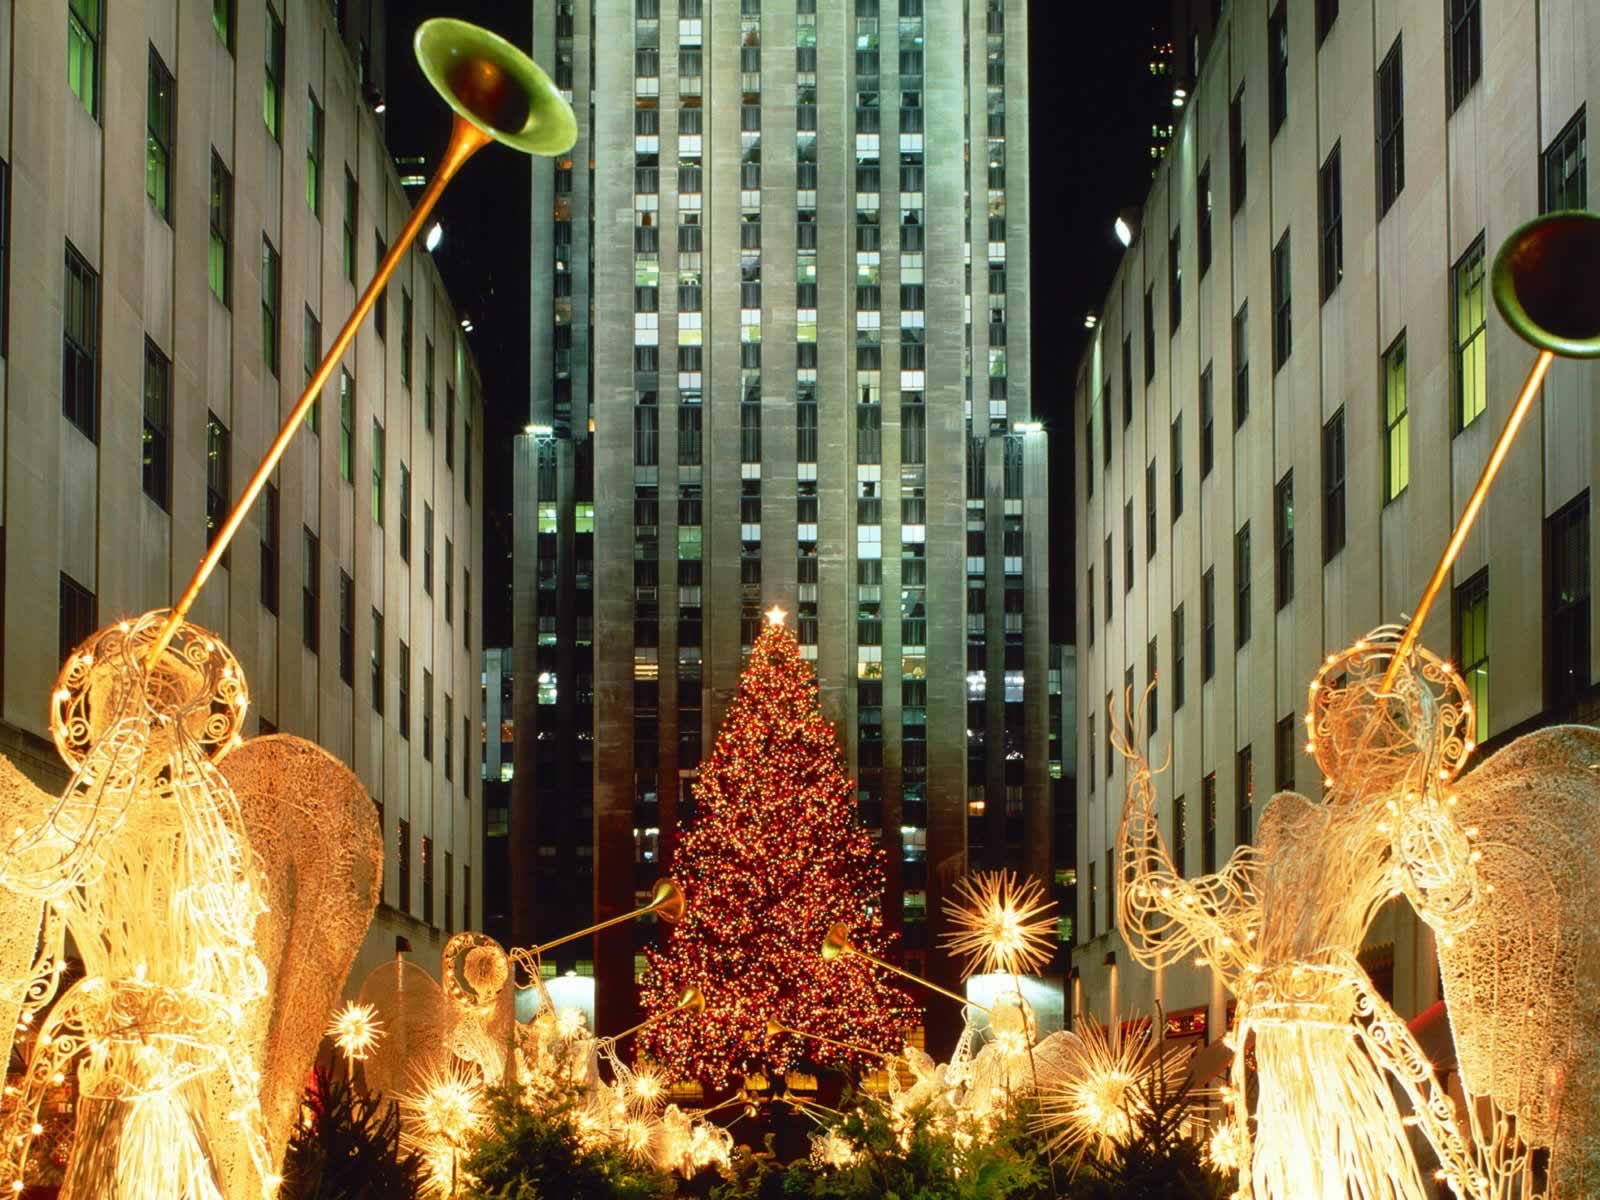 Christmas At Rockefeller Center New York City - Christmas Landscapes